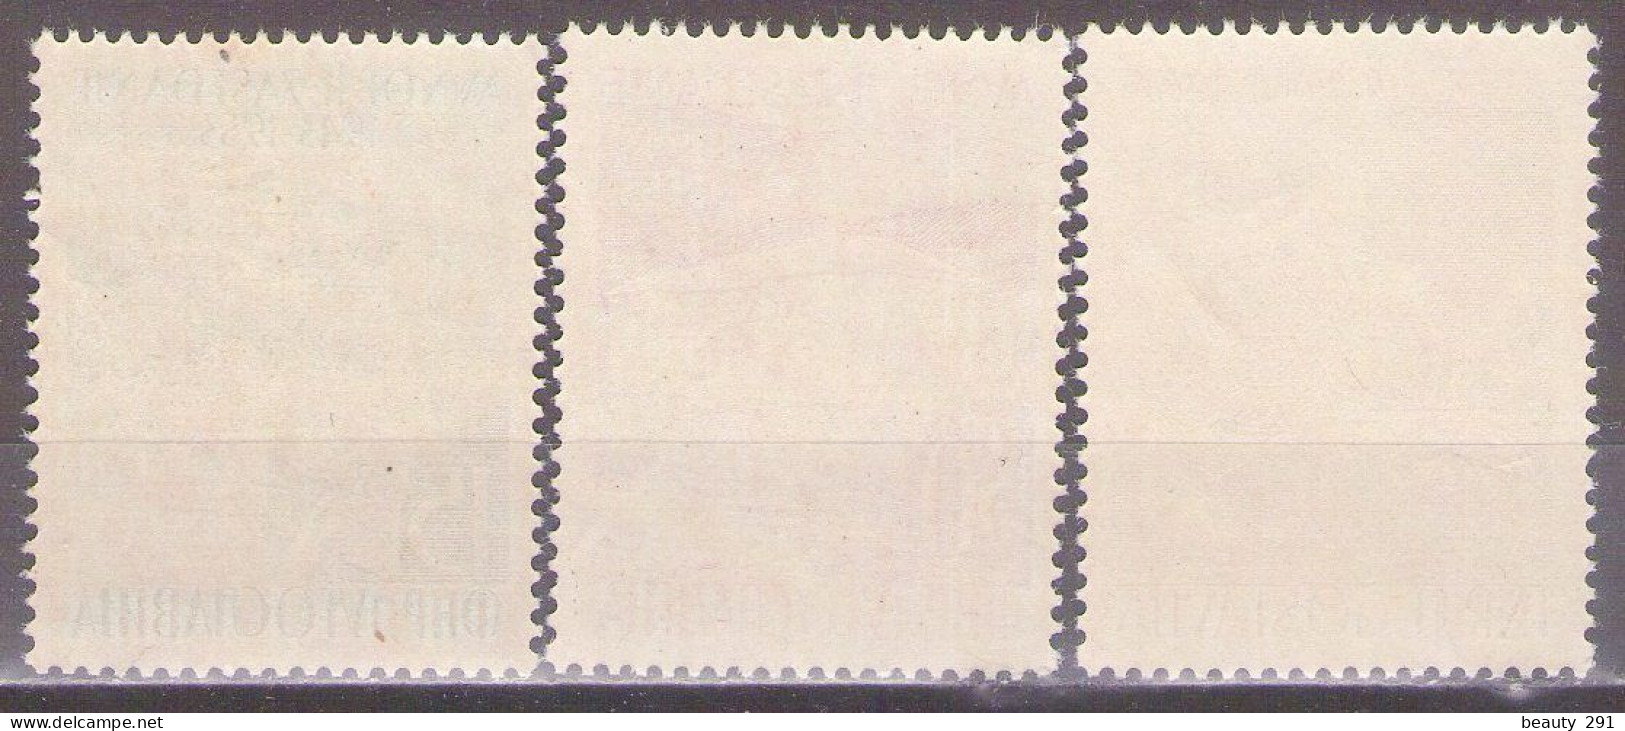 Yugoslavia 1953 -1st Republican Legislative Assembly AVNOJ II  - Mi 735-737 - MNH**VF - Unused Stamps